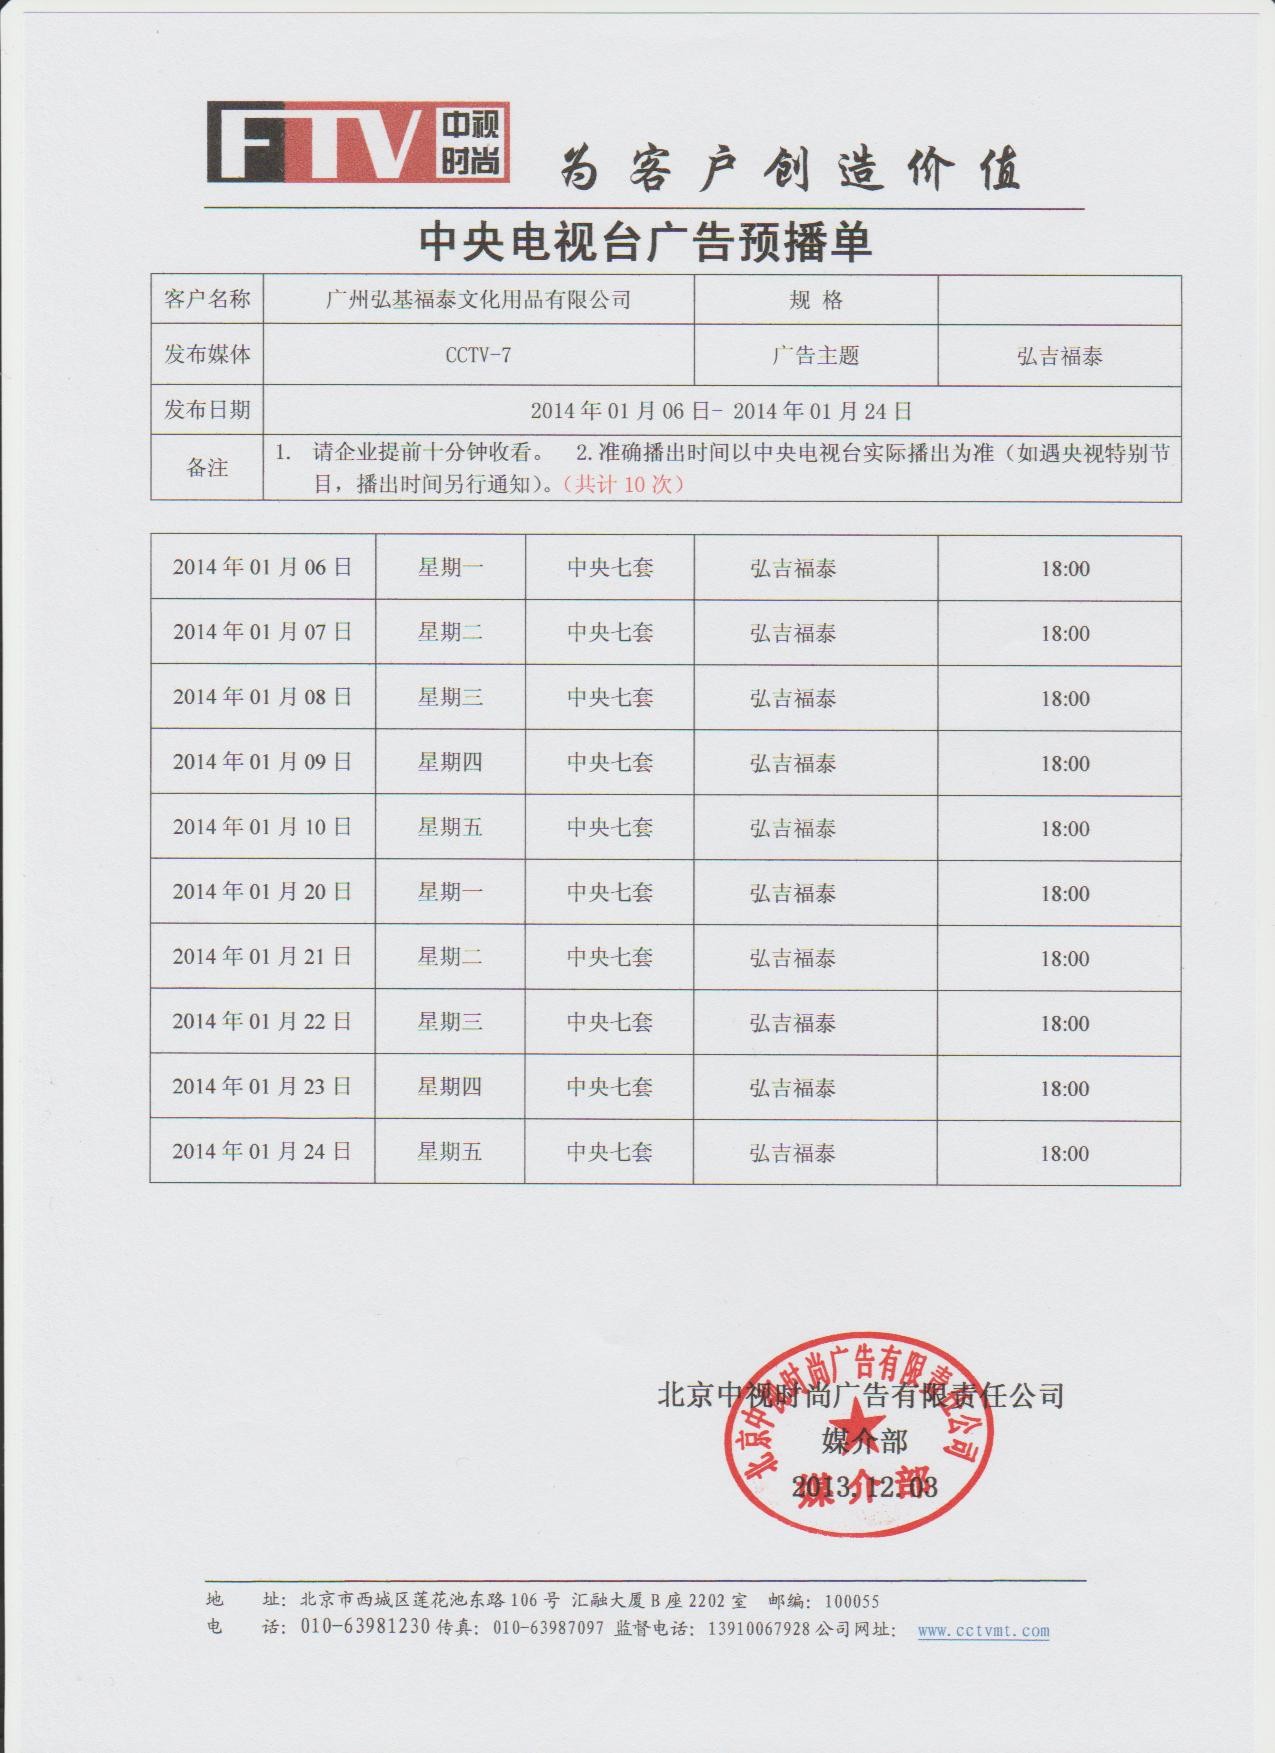 CCTV中央电视台广告从12月16日开始播出